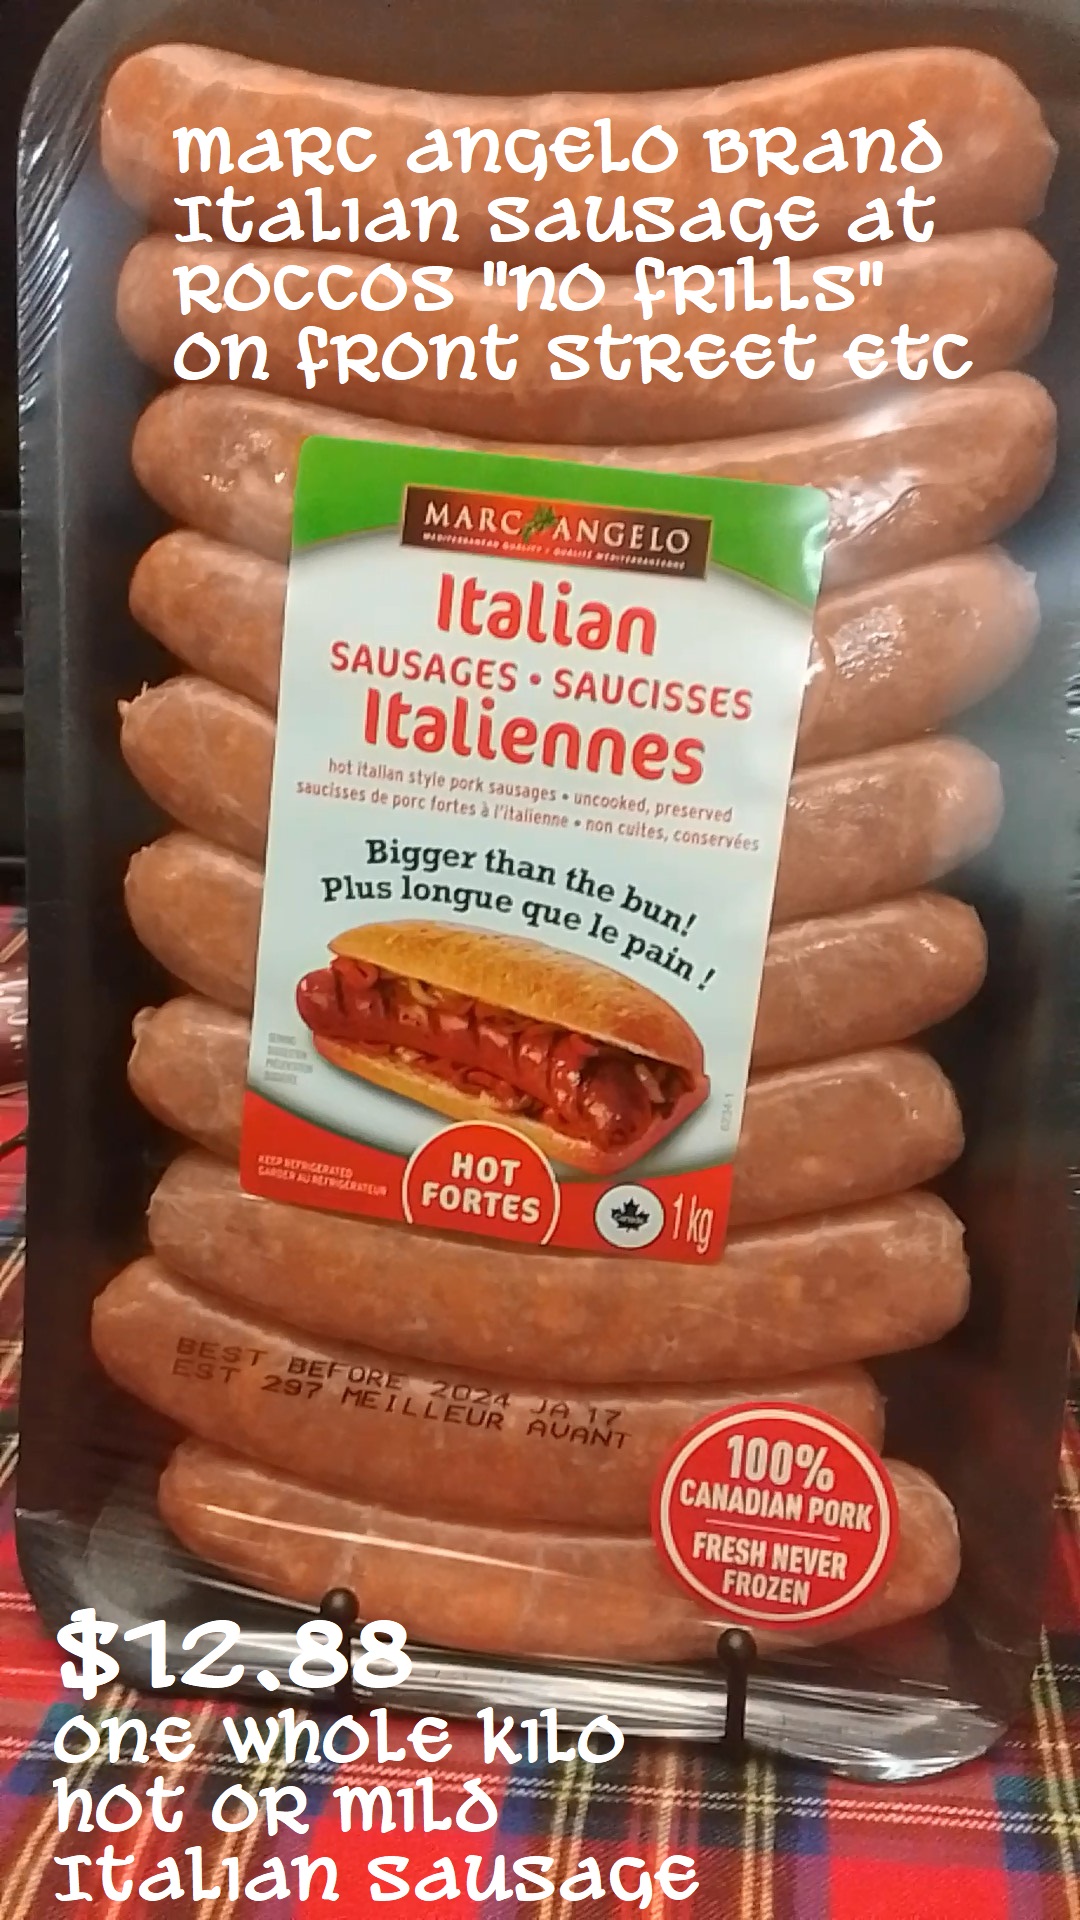 tasty sausage treat - Italian made